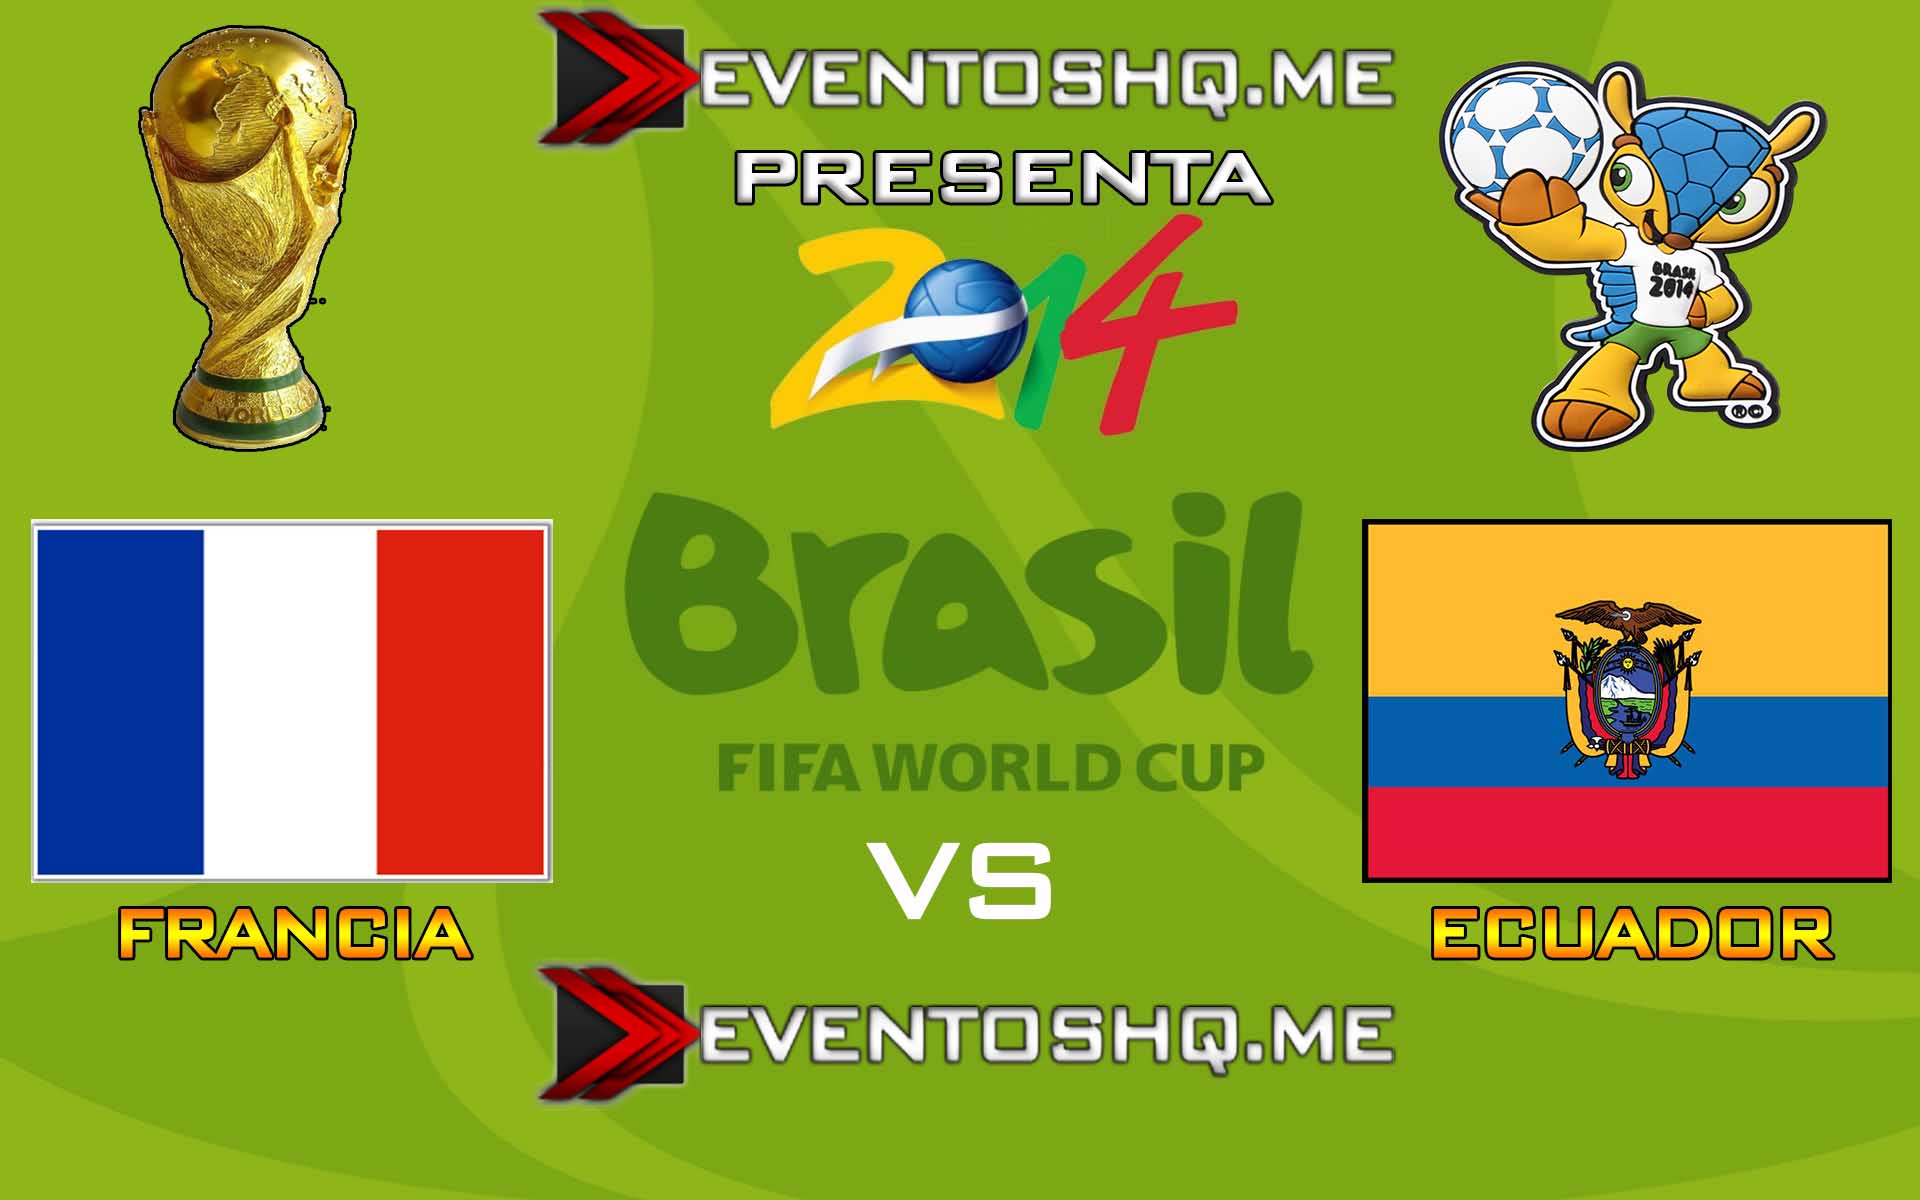 Ver en Vivo Francia vs Ecuador Mundial Brasil 2014 www.eventoshq.me